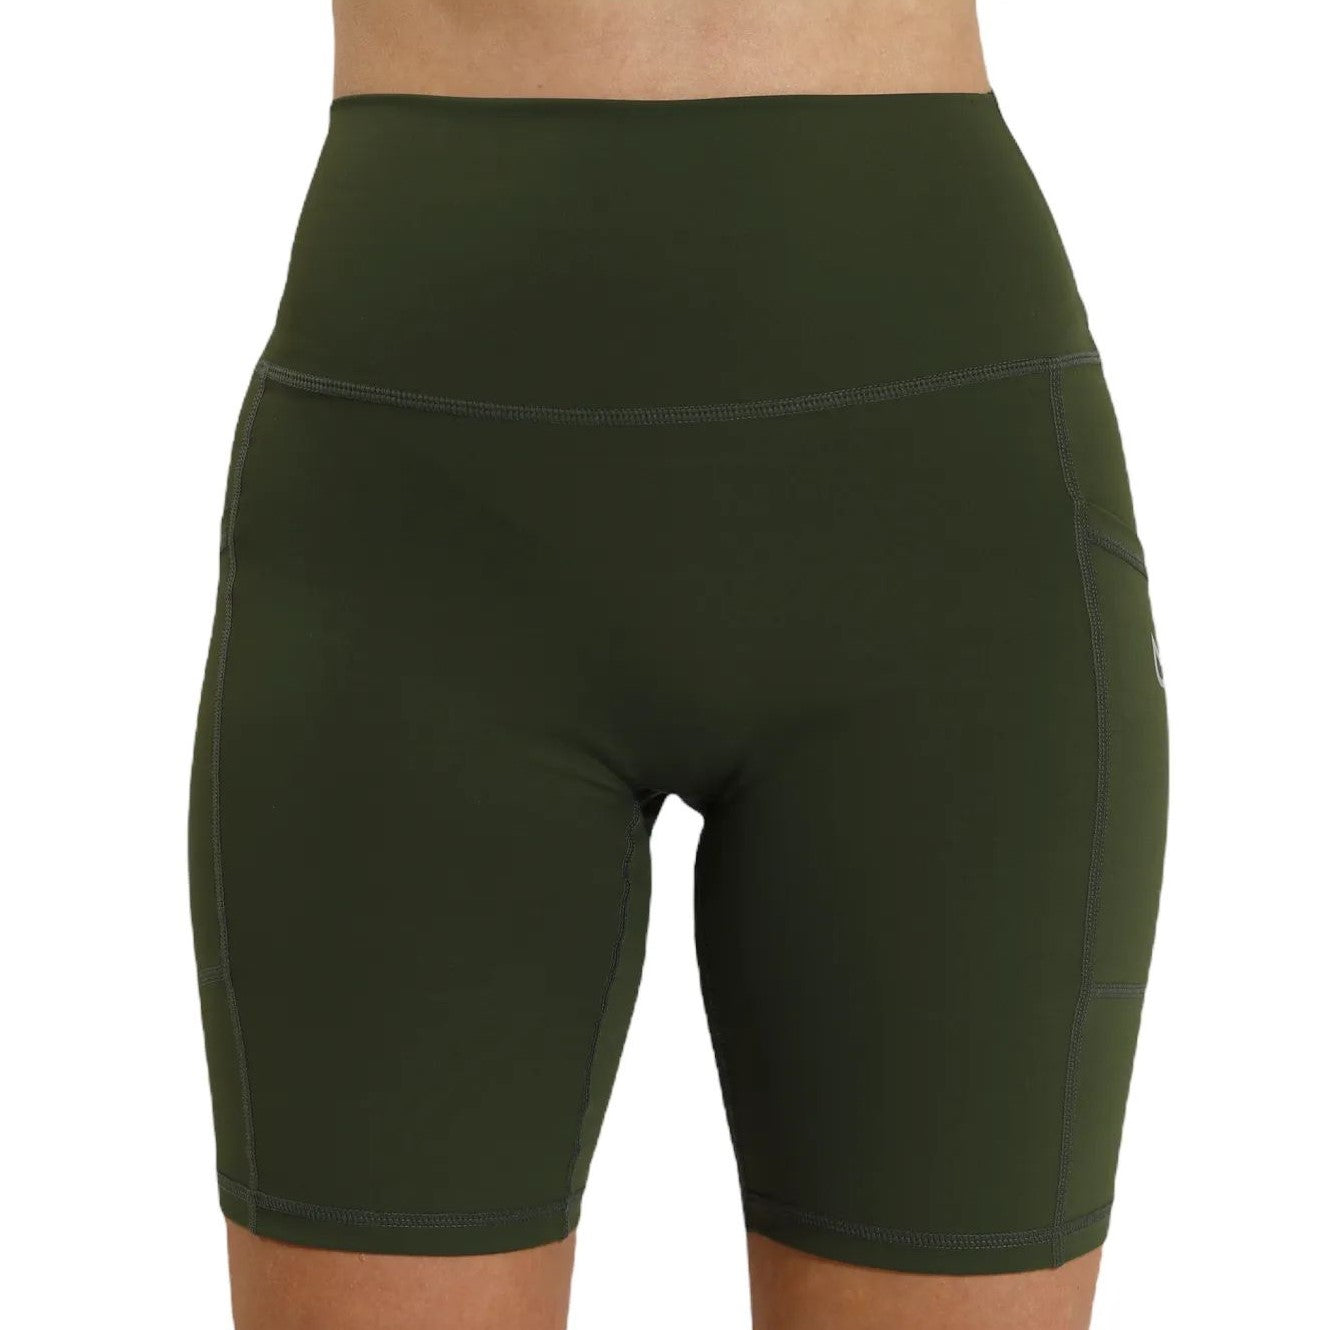 Olive Green Cycling Shorts